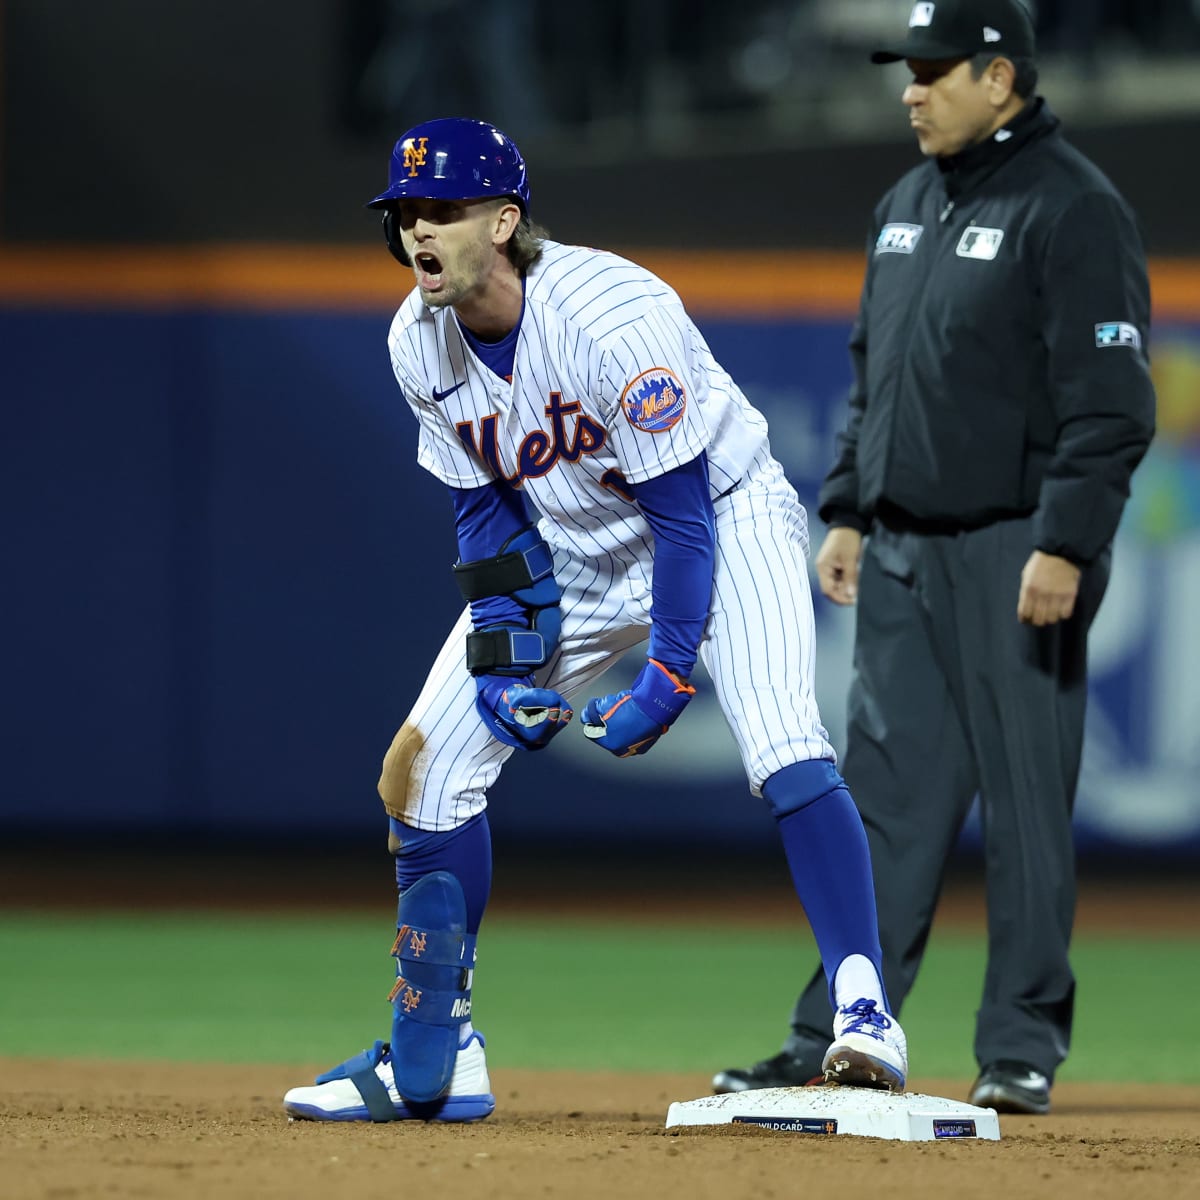 Jeff McNeil, New York Mets, 2B - News, Stats, Bio 